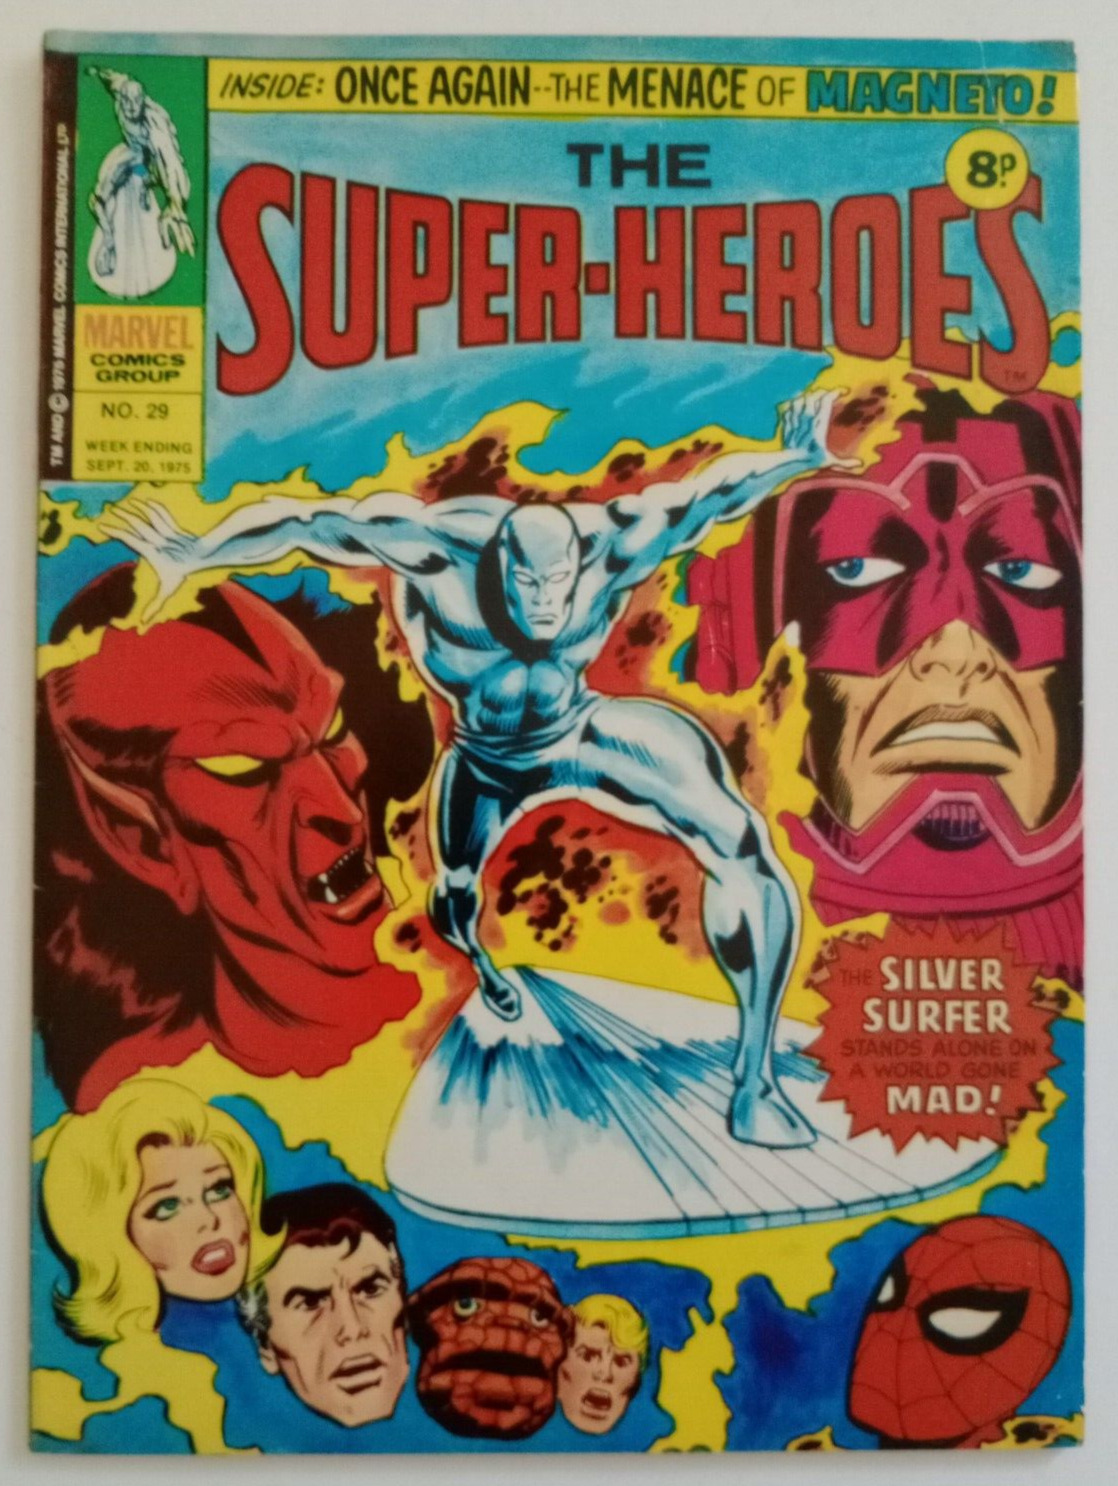 THE SUPER-HEROES #29 * MARVEL UK * FF X-MEN #16 SPIDERMAN SILVER SURFER * USA